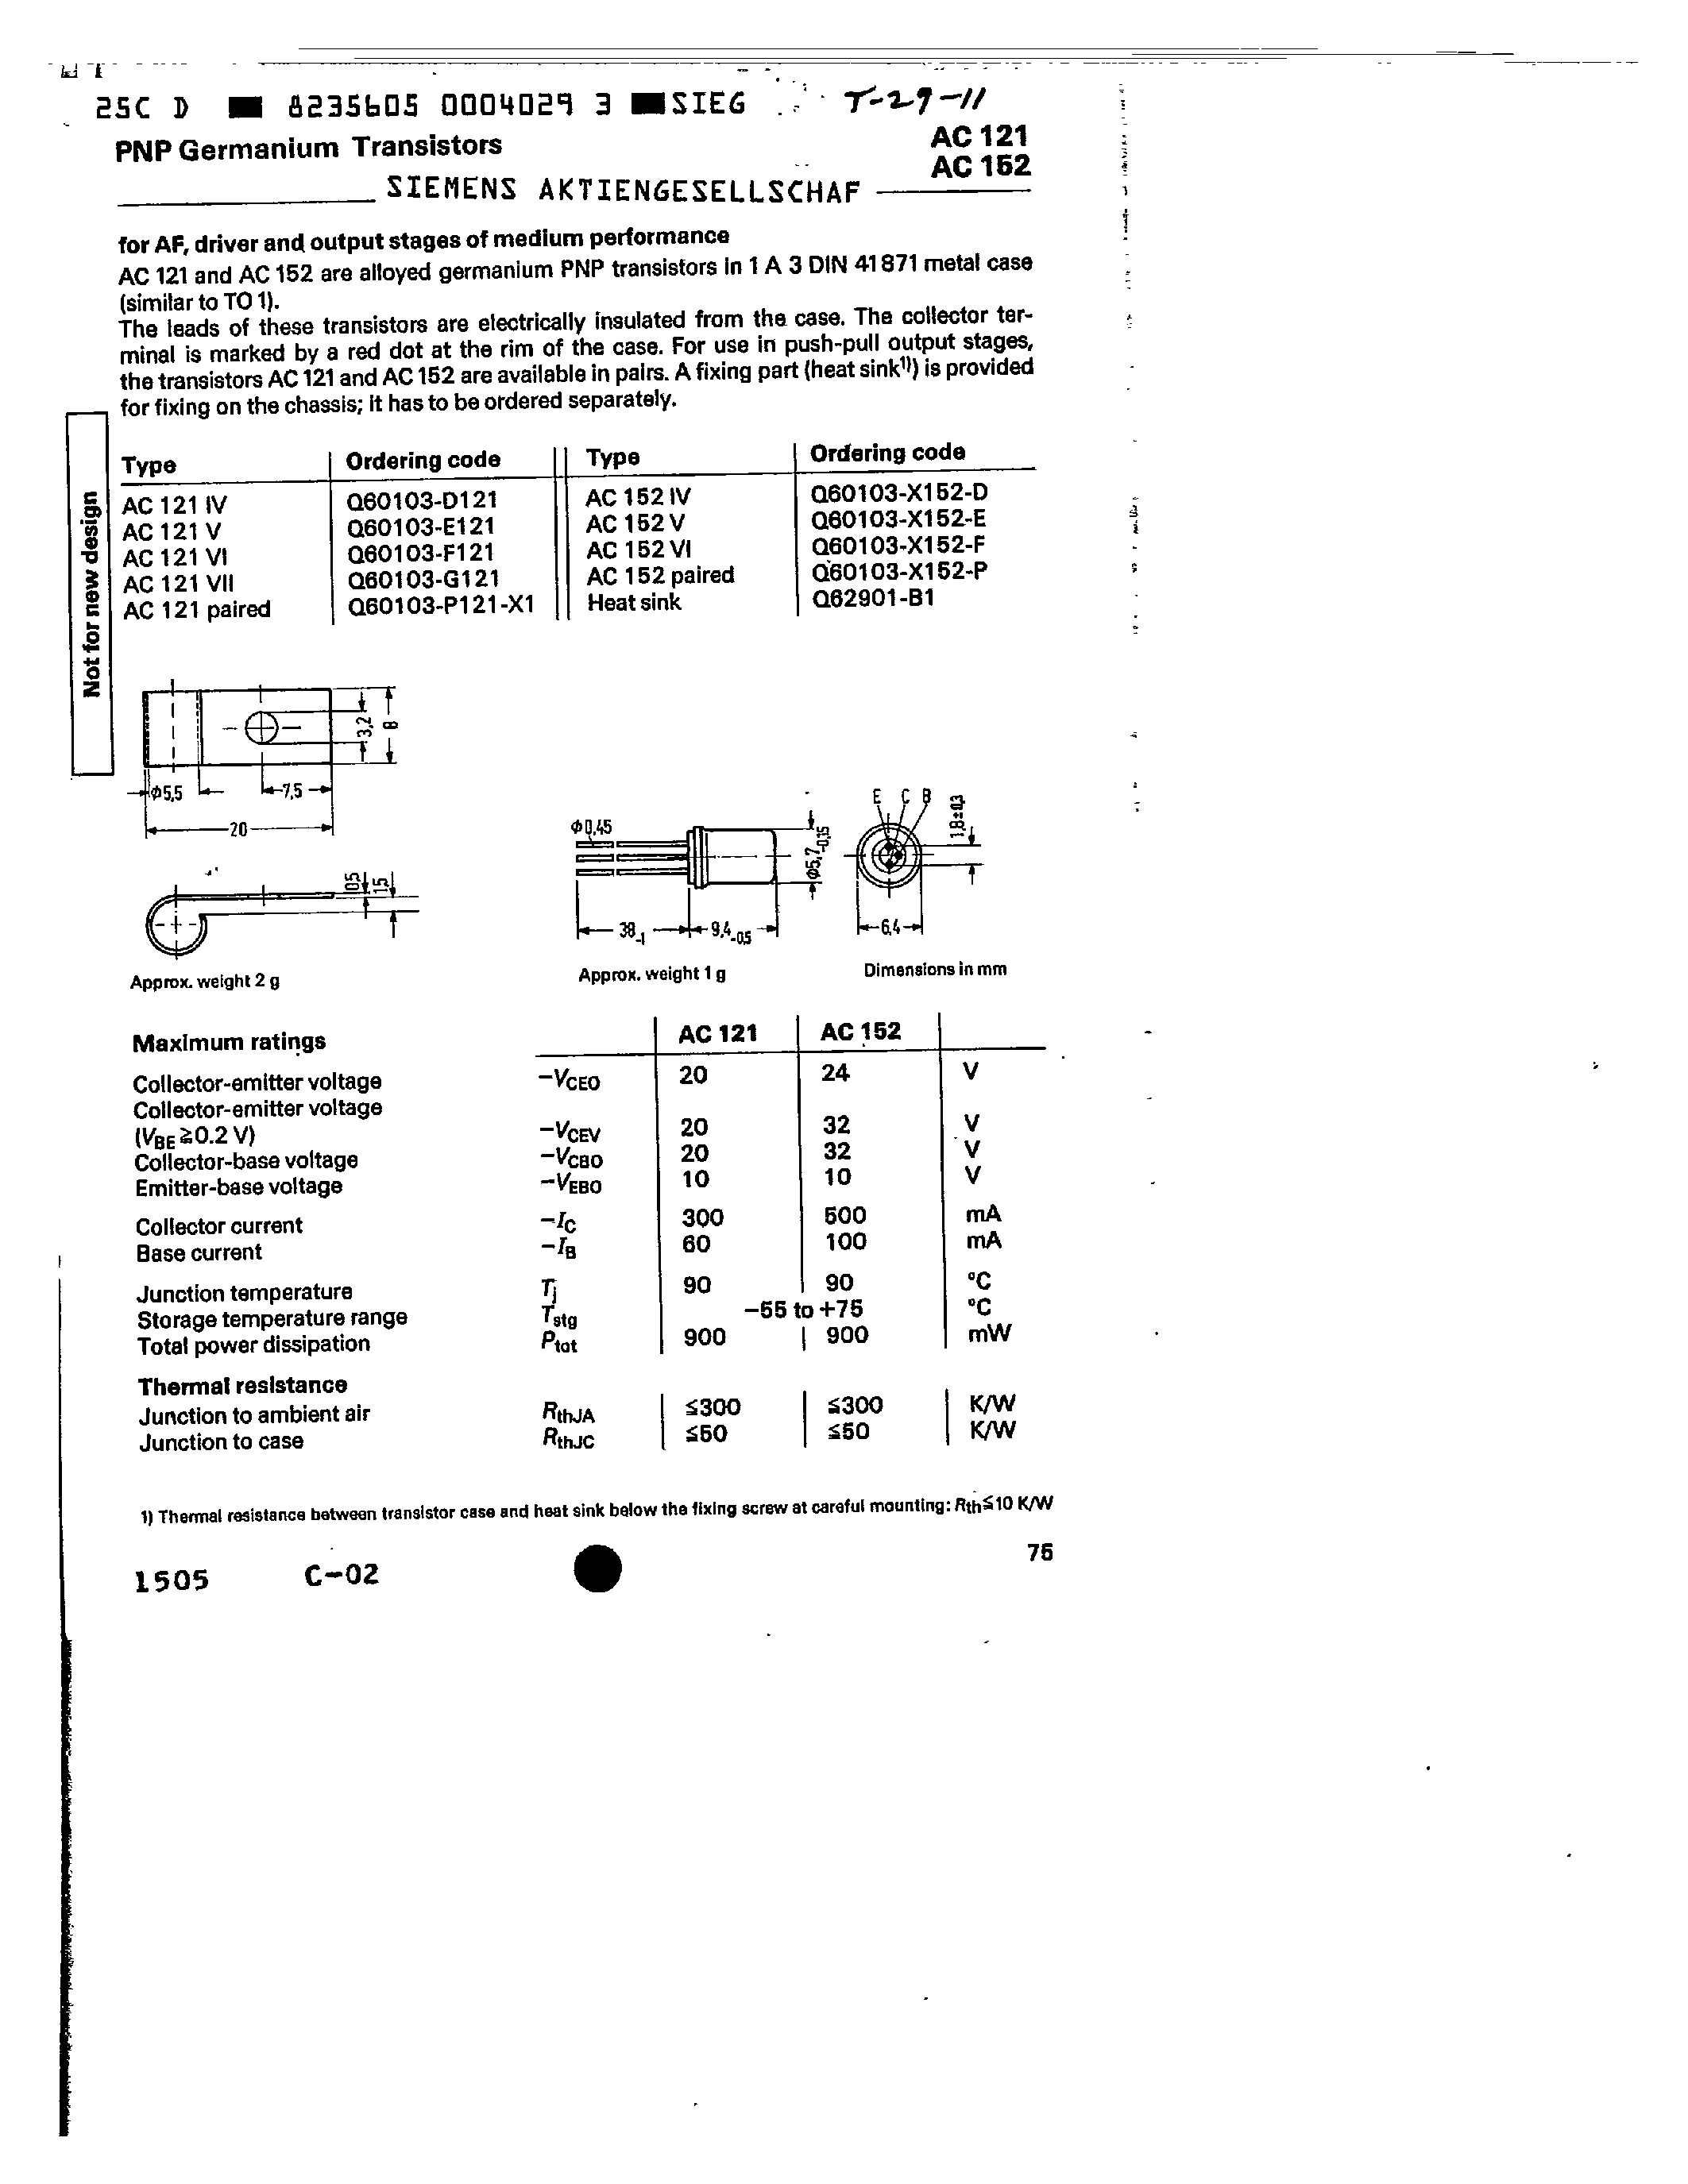 Datasheet Q60103-X152-E - pnp germanium transistors page 1